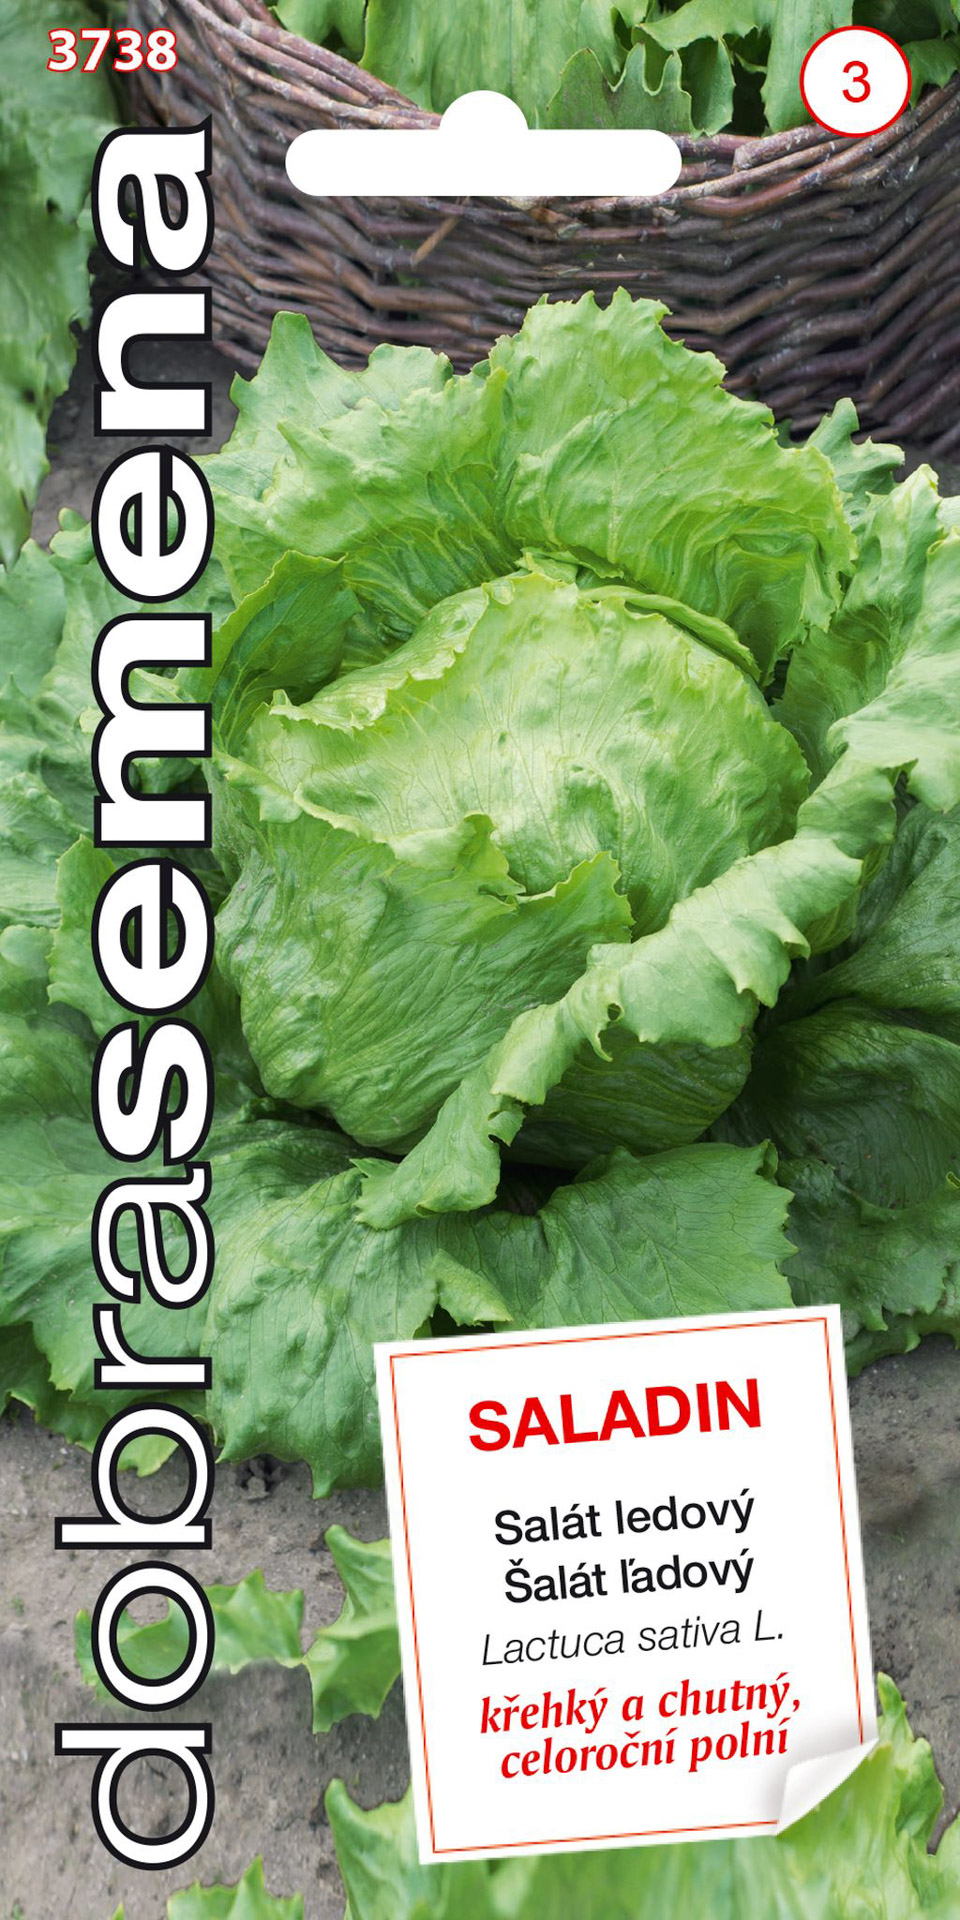 Dobrá semena Salát celoroční ledový - Saladin 0,6g - 4eadc304 db66 4f47 ab0a 124e8b0a1dd4